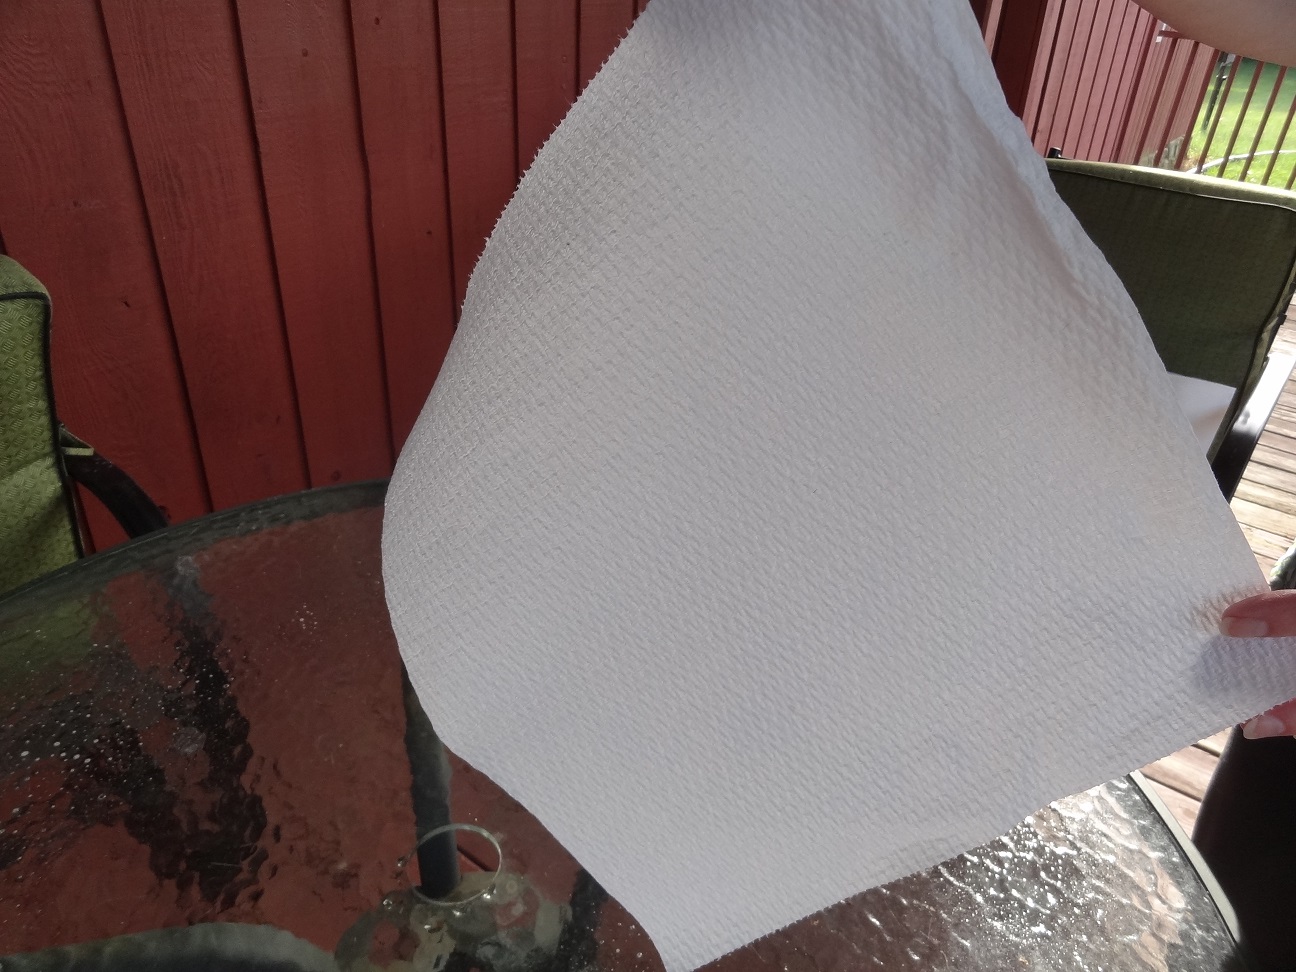 One paper towel challenge #VivaTowels